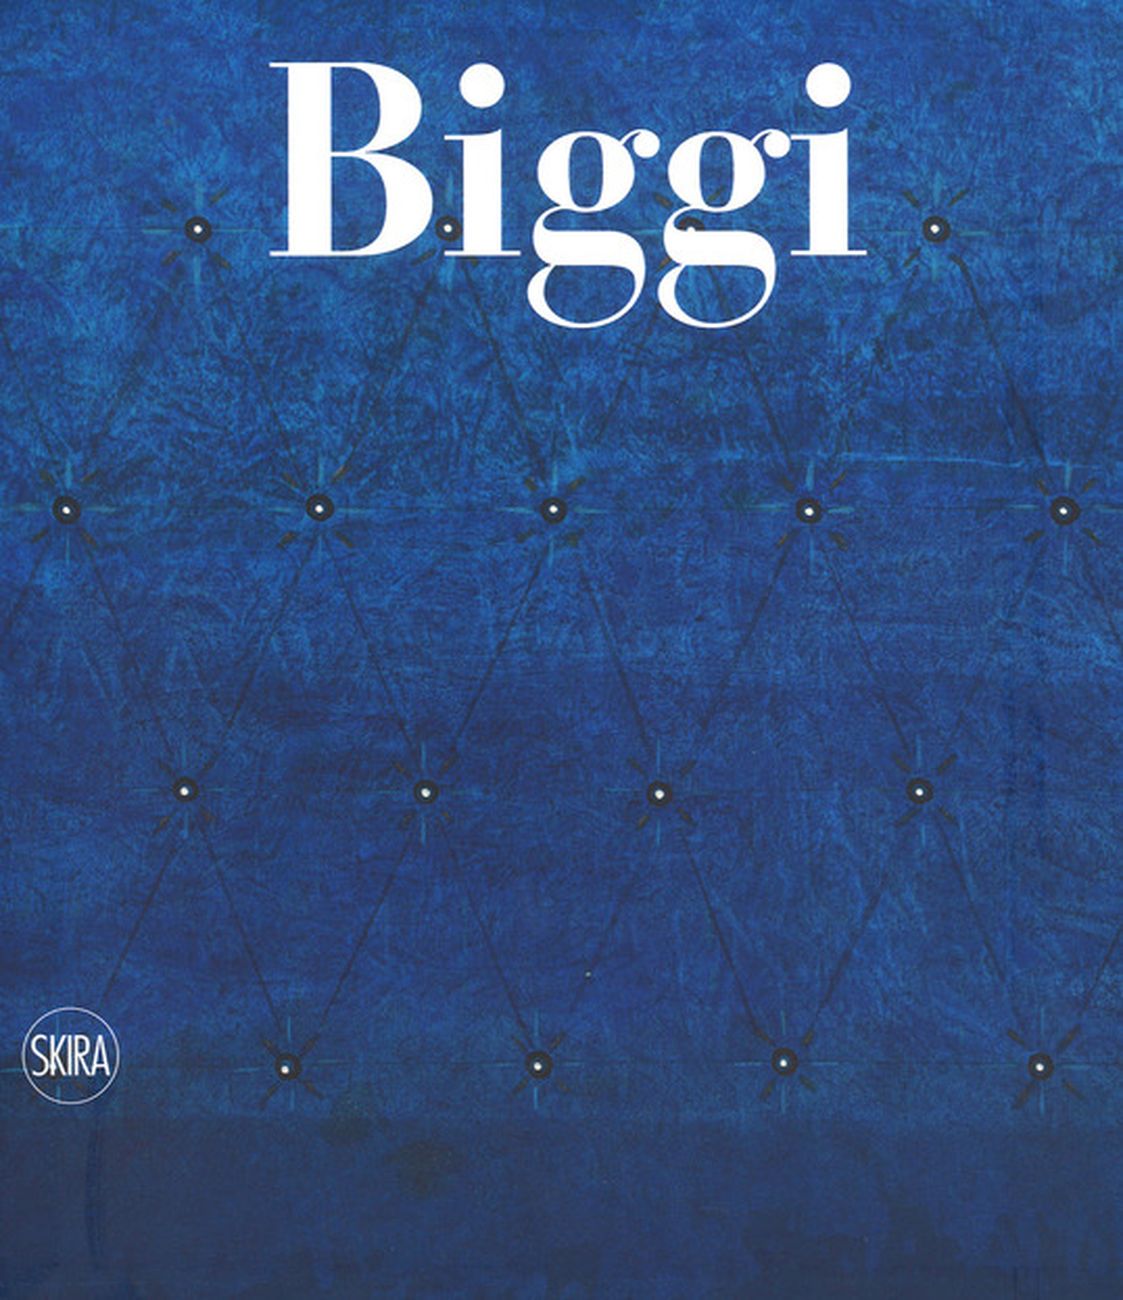 Gastone Biggi. Catalogo ragionato dei dipinti (Skira, Milano 2019)